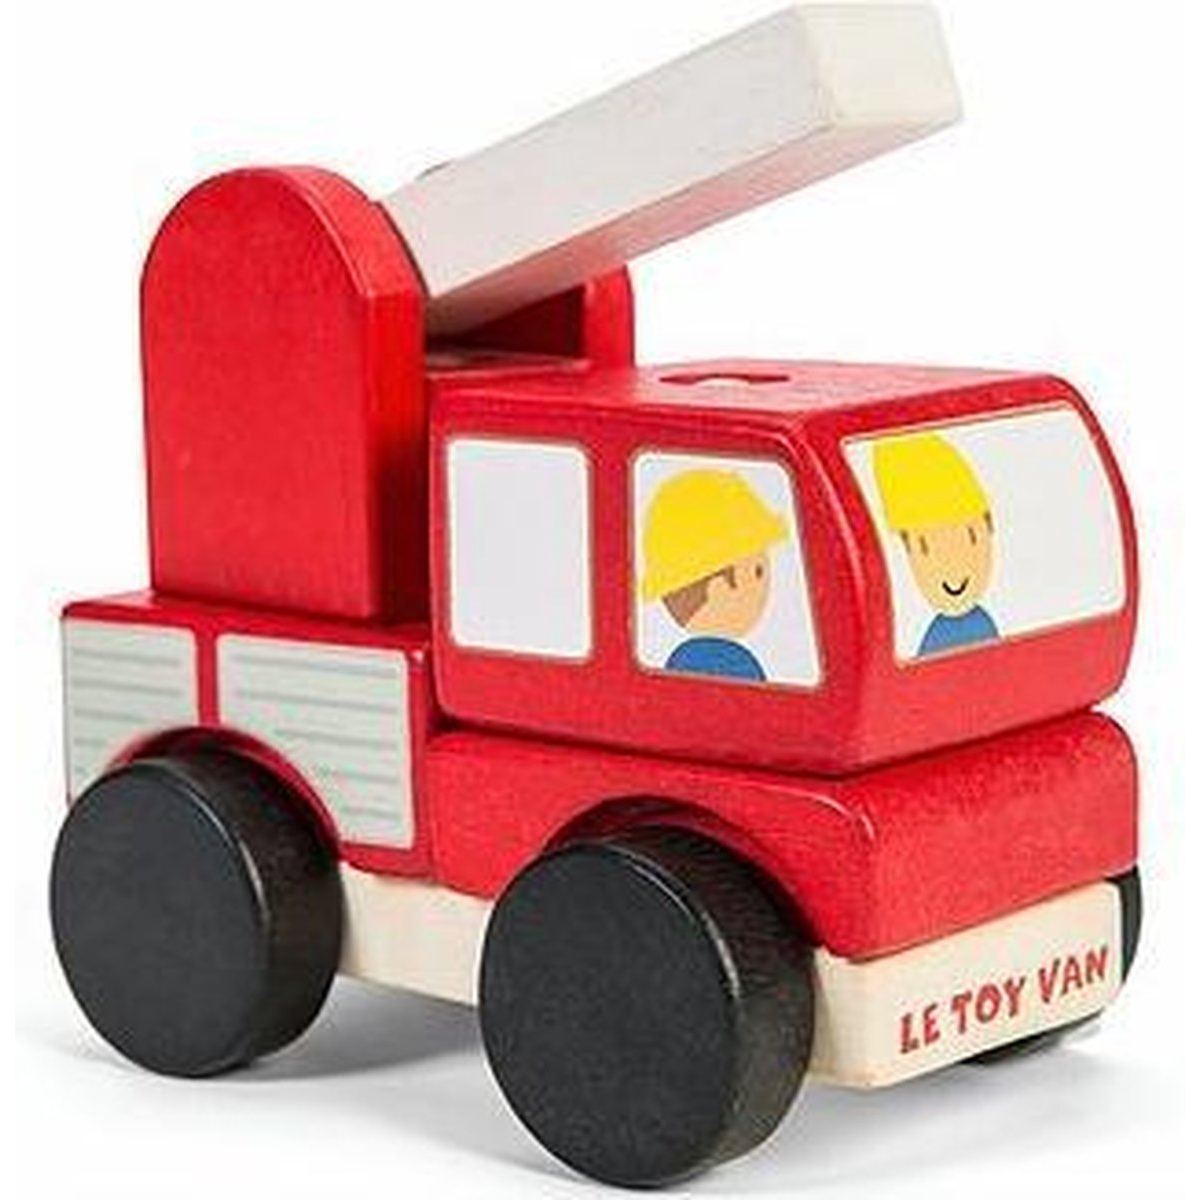 Le Toy Van Stapelset Voertuigen Rood - Hout